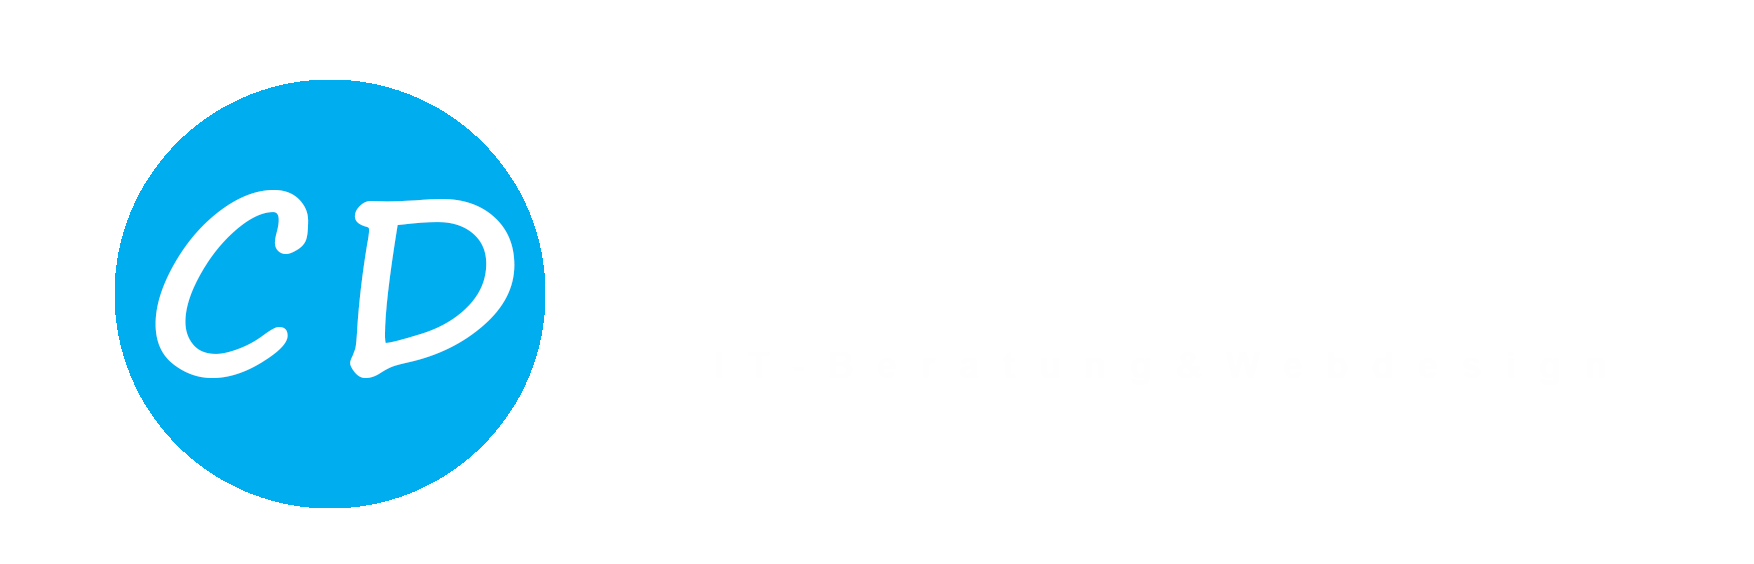 Christian Dyczka - mvbits.de Logo